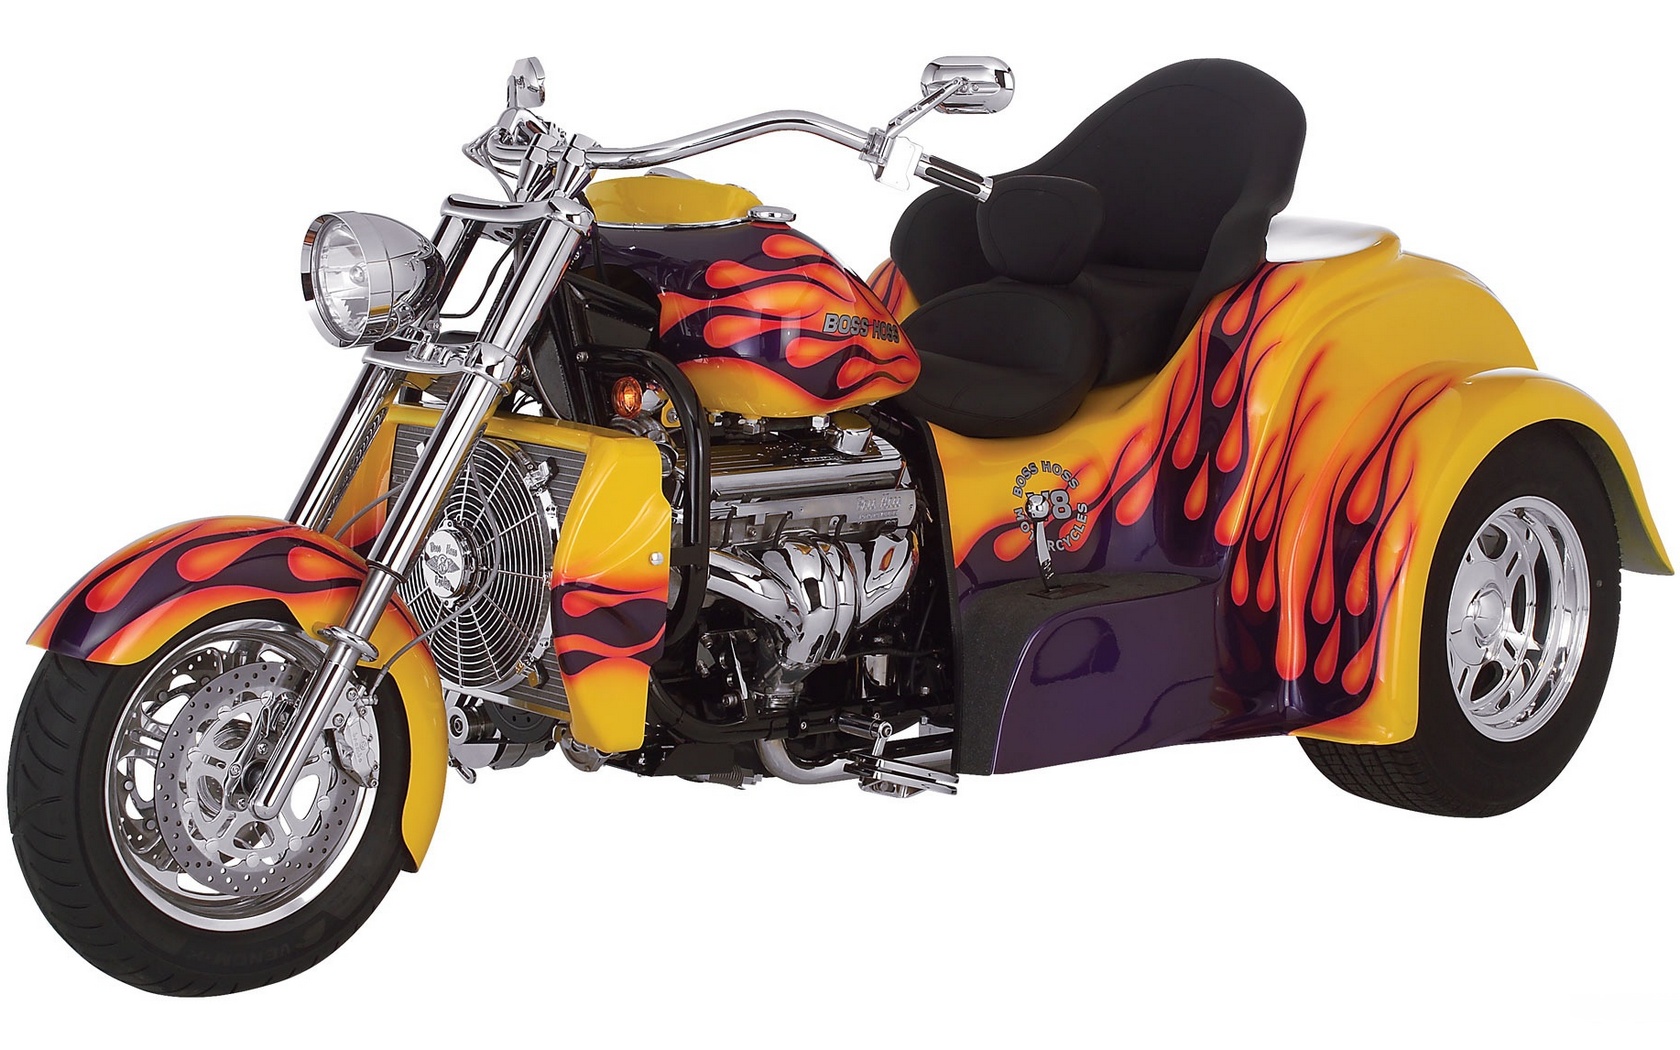 Download full size boss-hoss Motorcycle wallpaper / 1680x1050